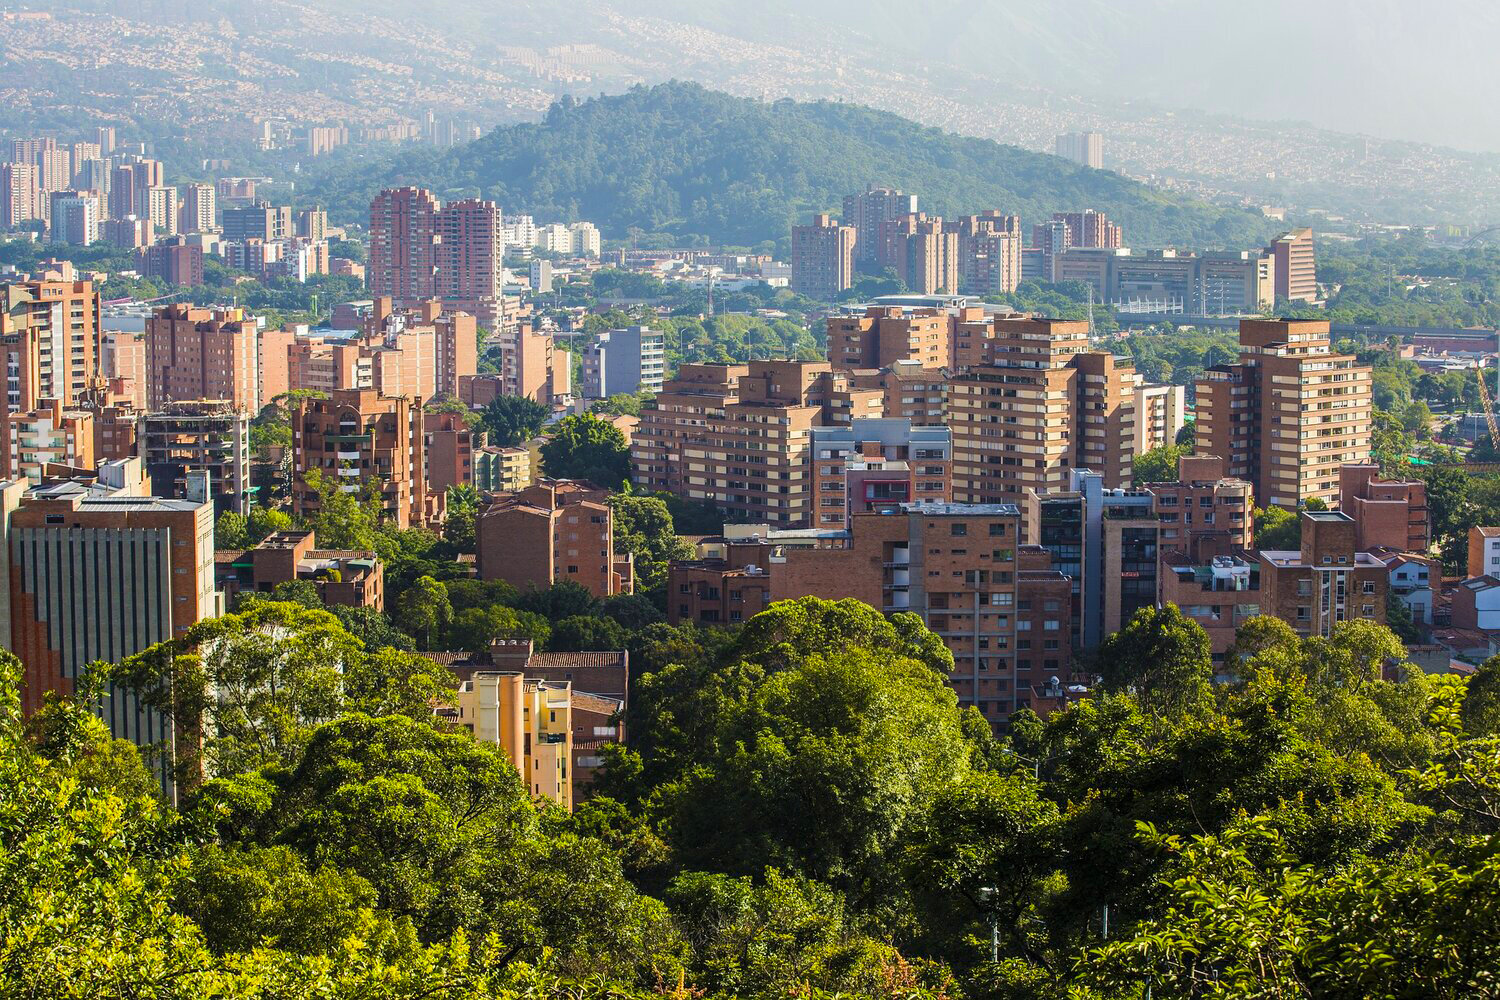 Bodies - Medellín